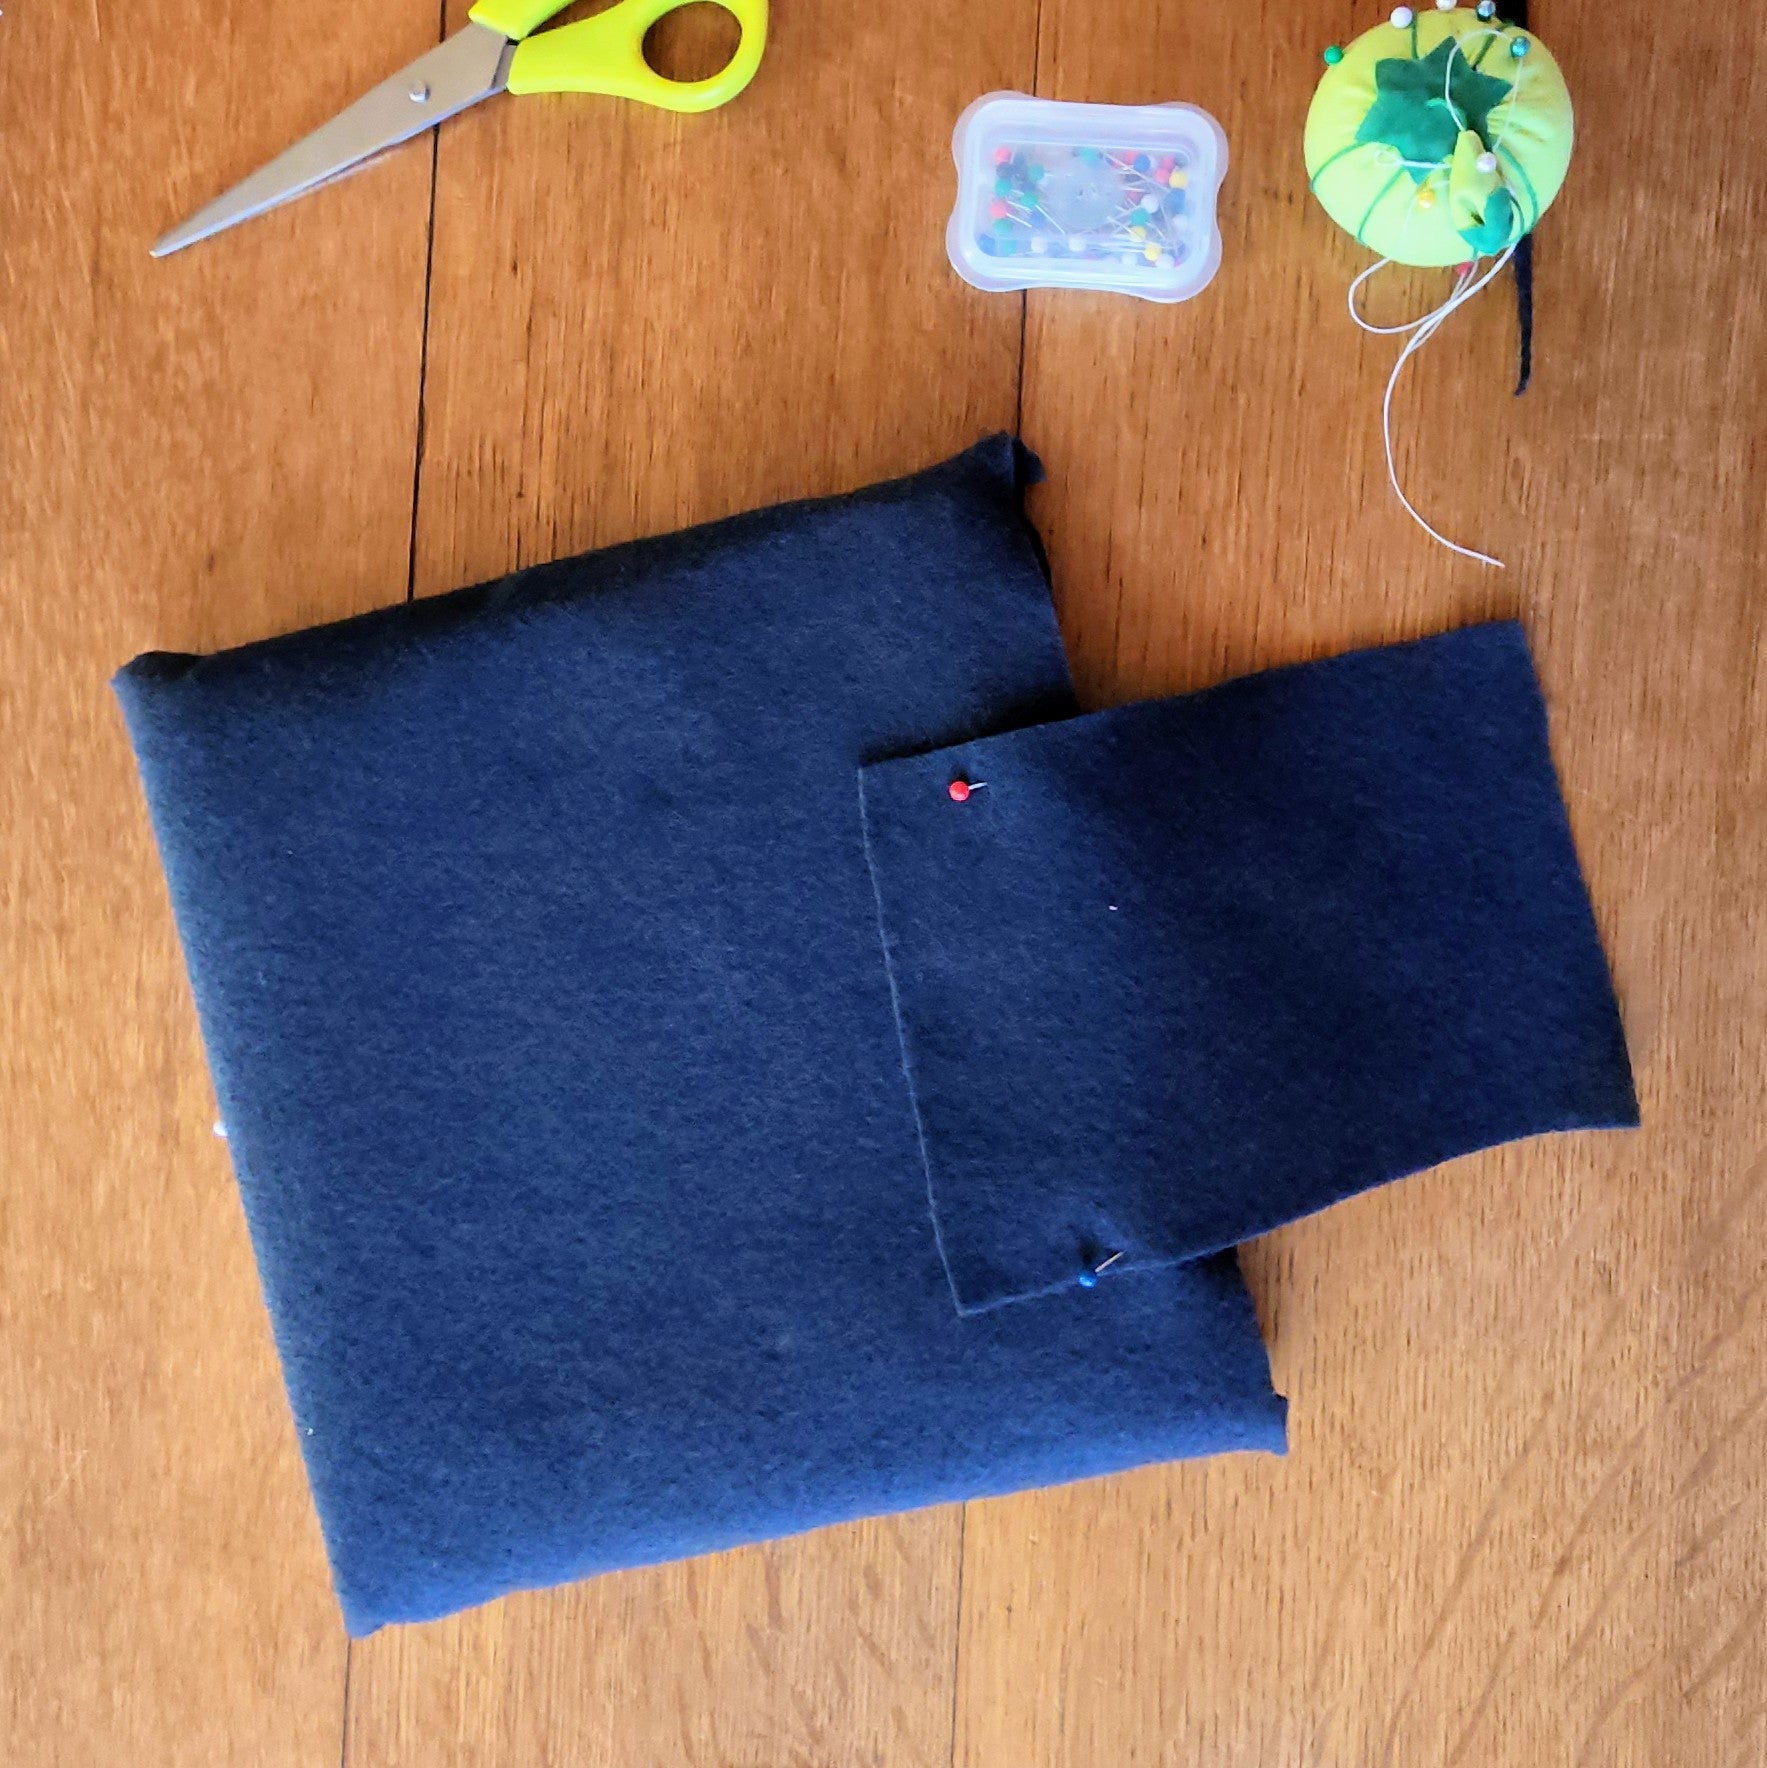 Adding a flap to a custom, DIY, journal sleeve